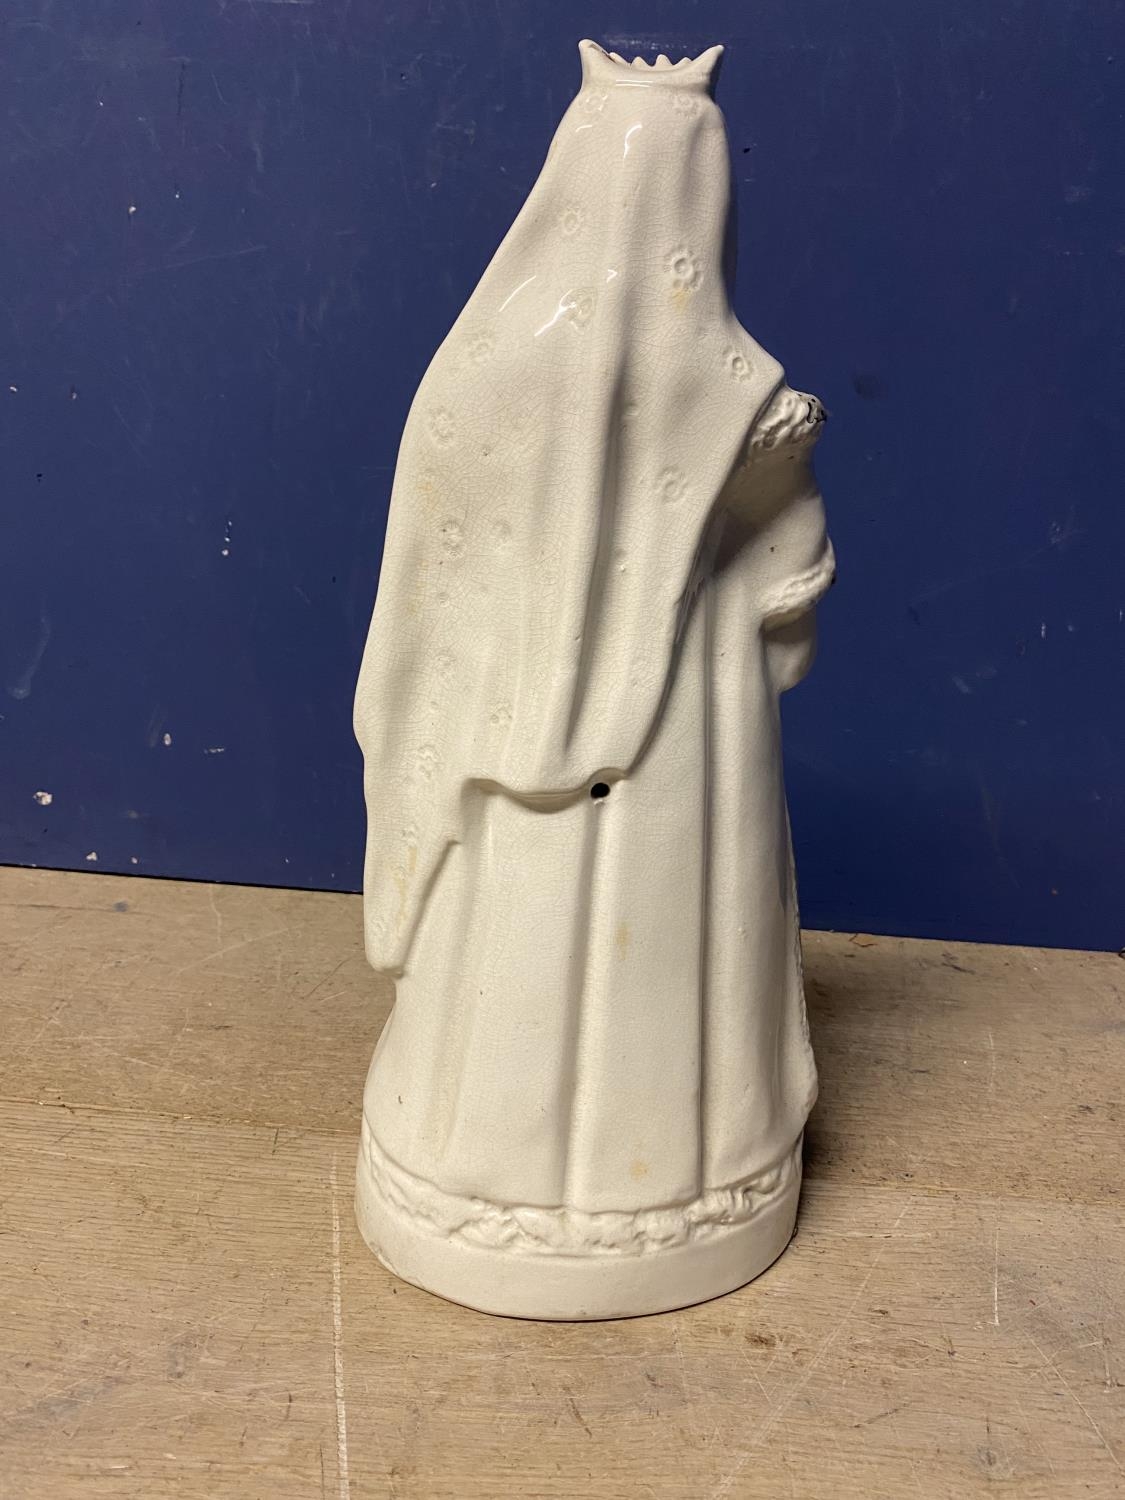 Ceramic figurine of Queen Elizabeth, some wear to gilding etc - Image 4 of 6